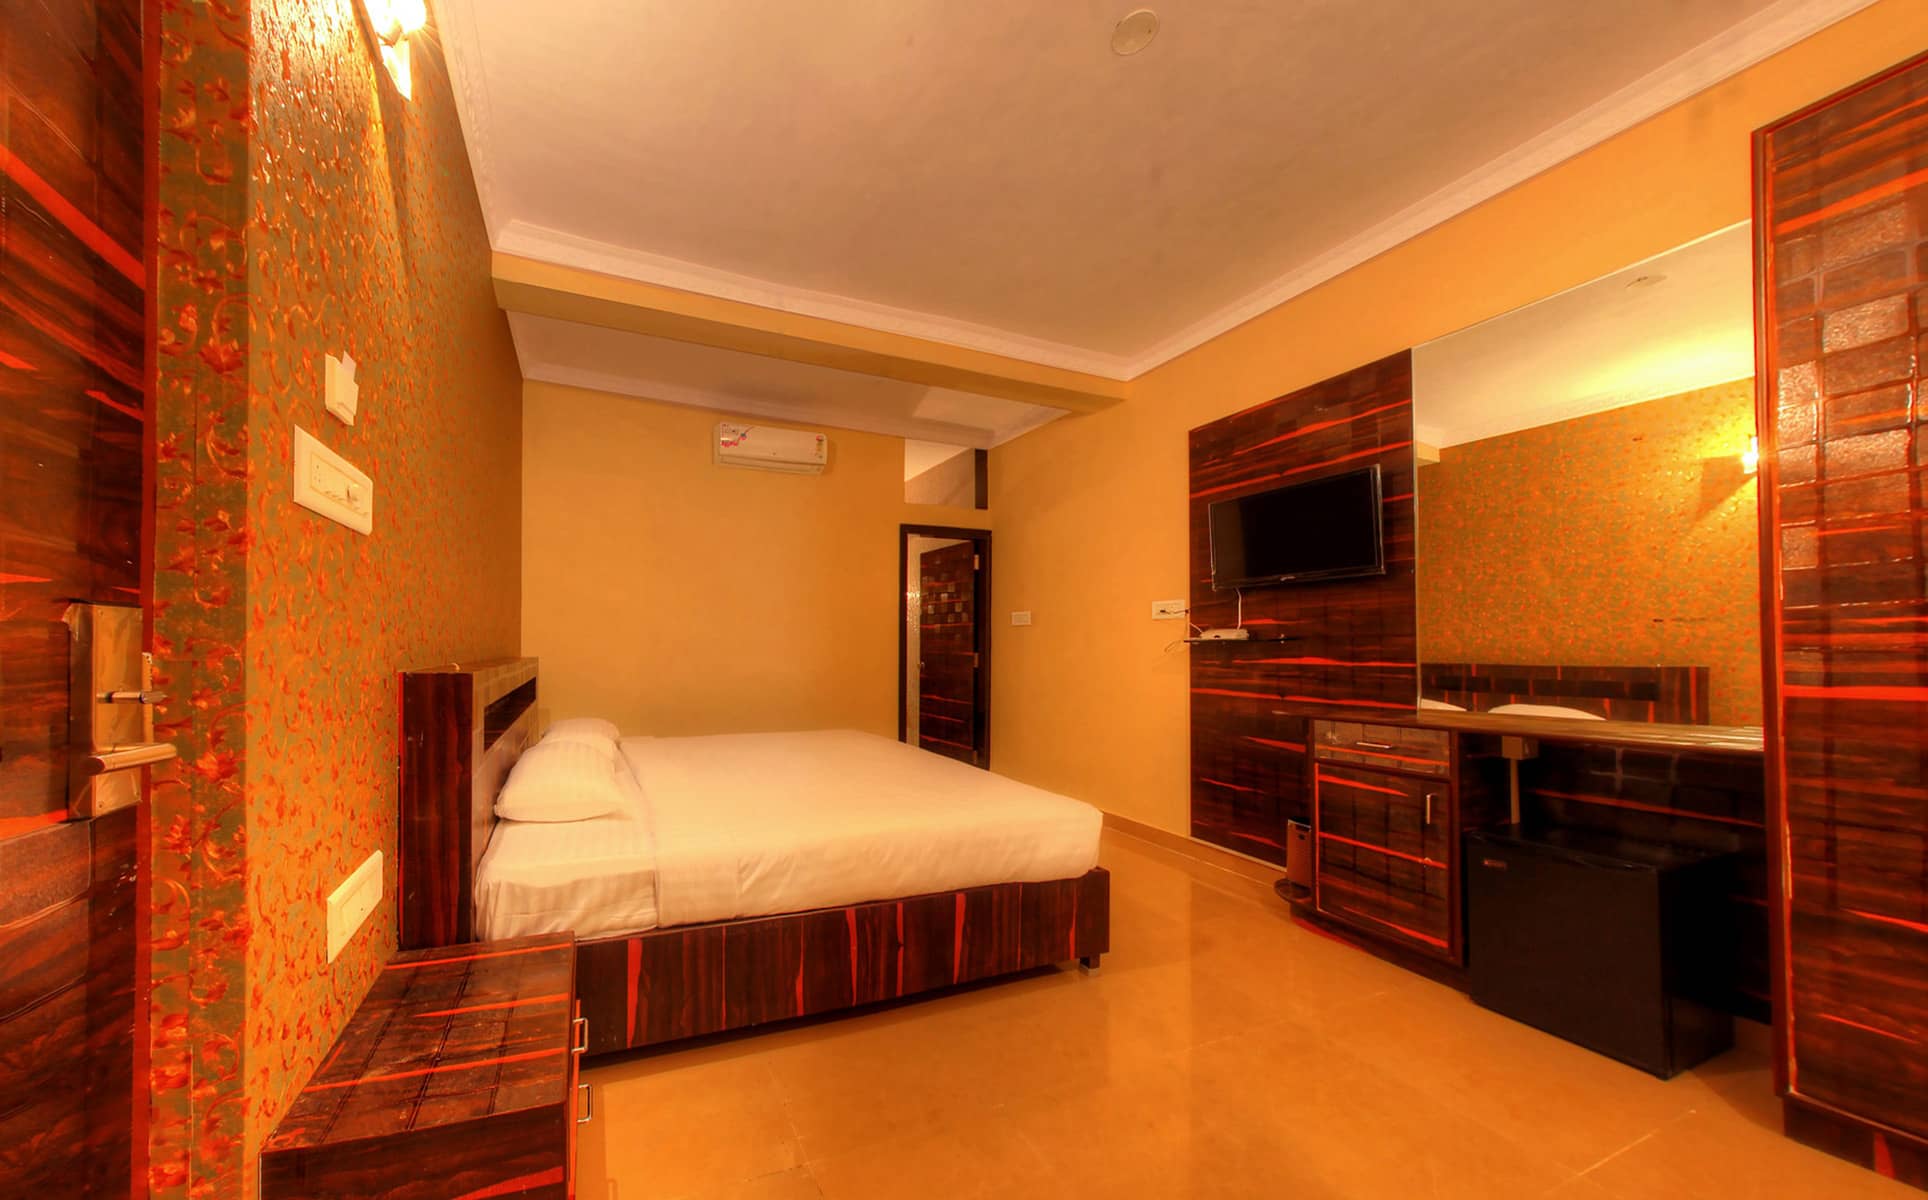 View of Queen Room in MK Jungle Resorts Gundlupet